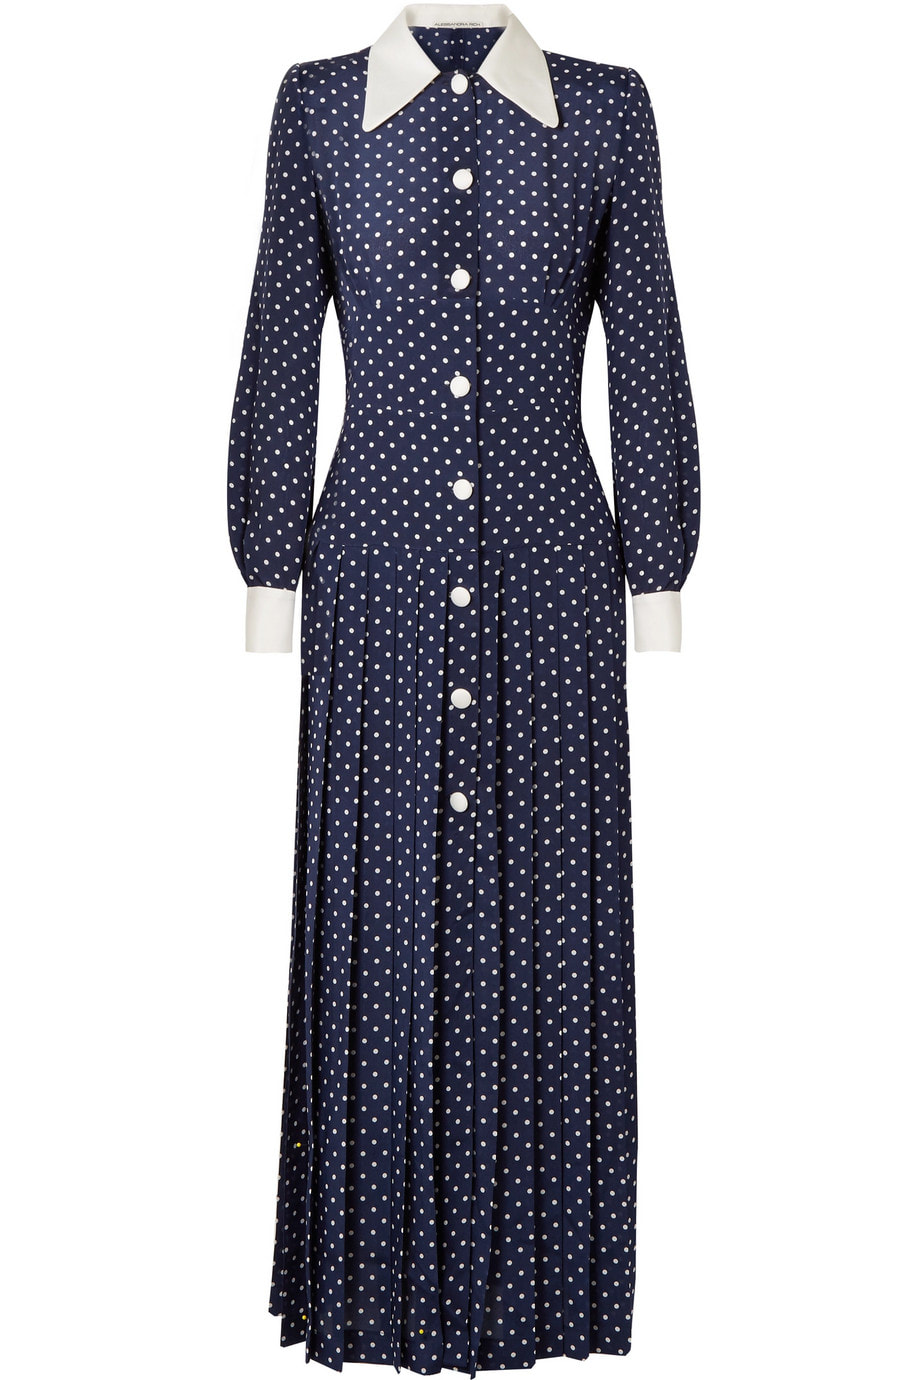 Alessandra Rich Navy Pleated polka-dot silk crepe de chine midi dress